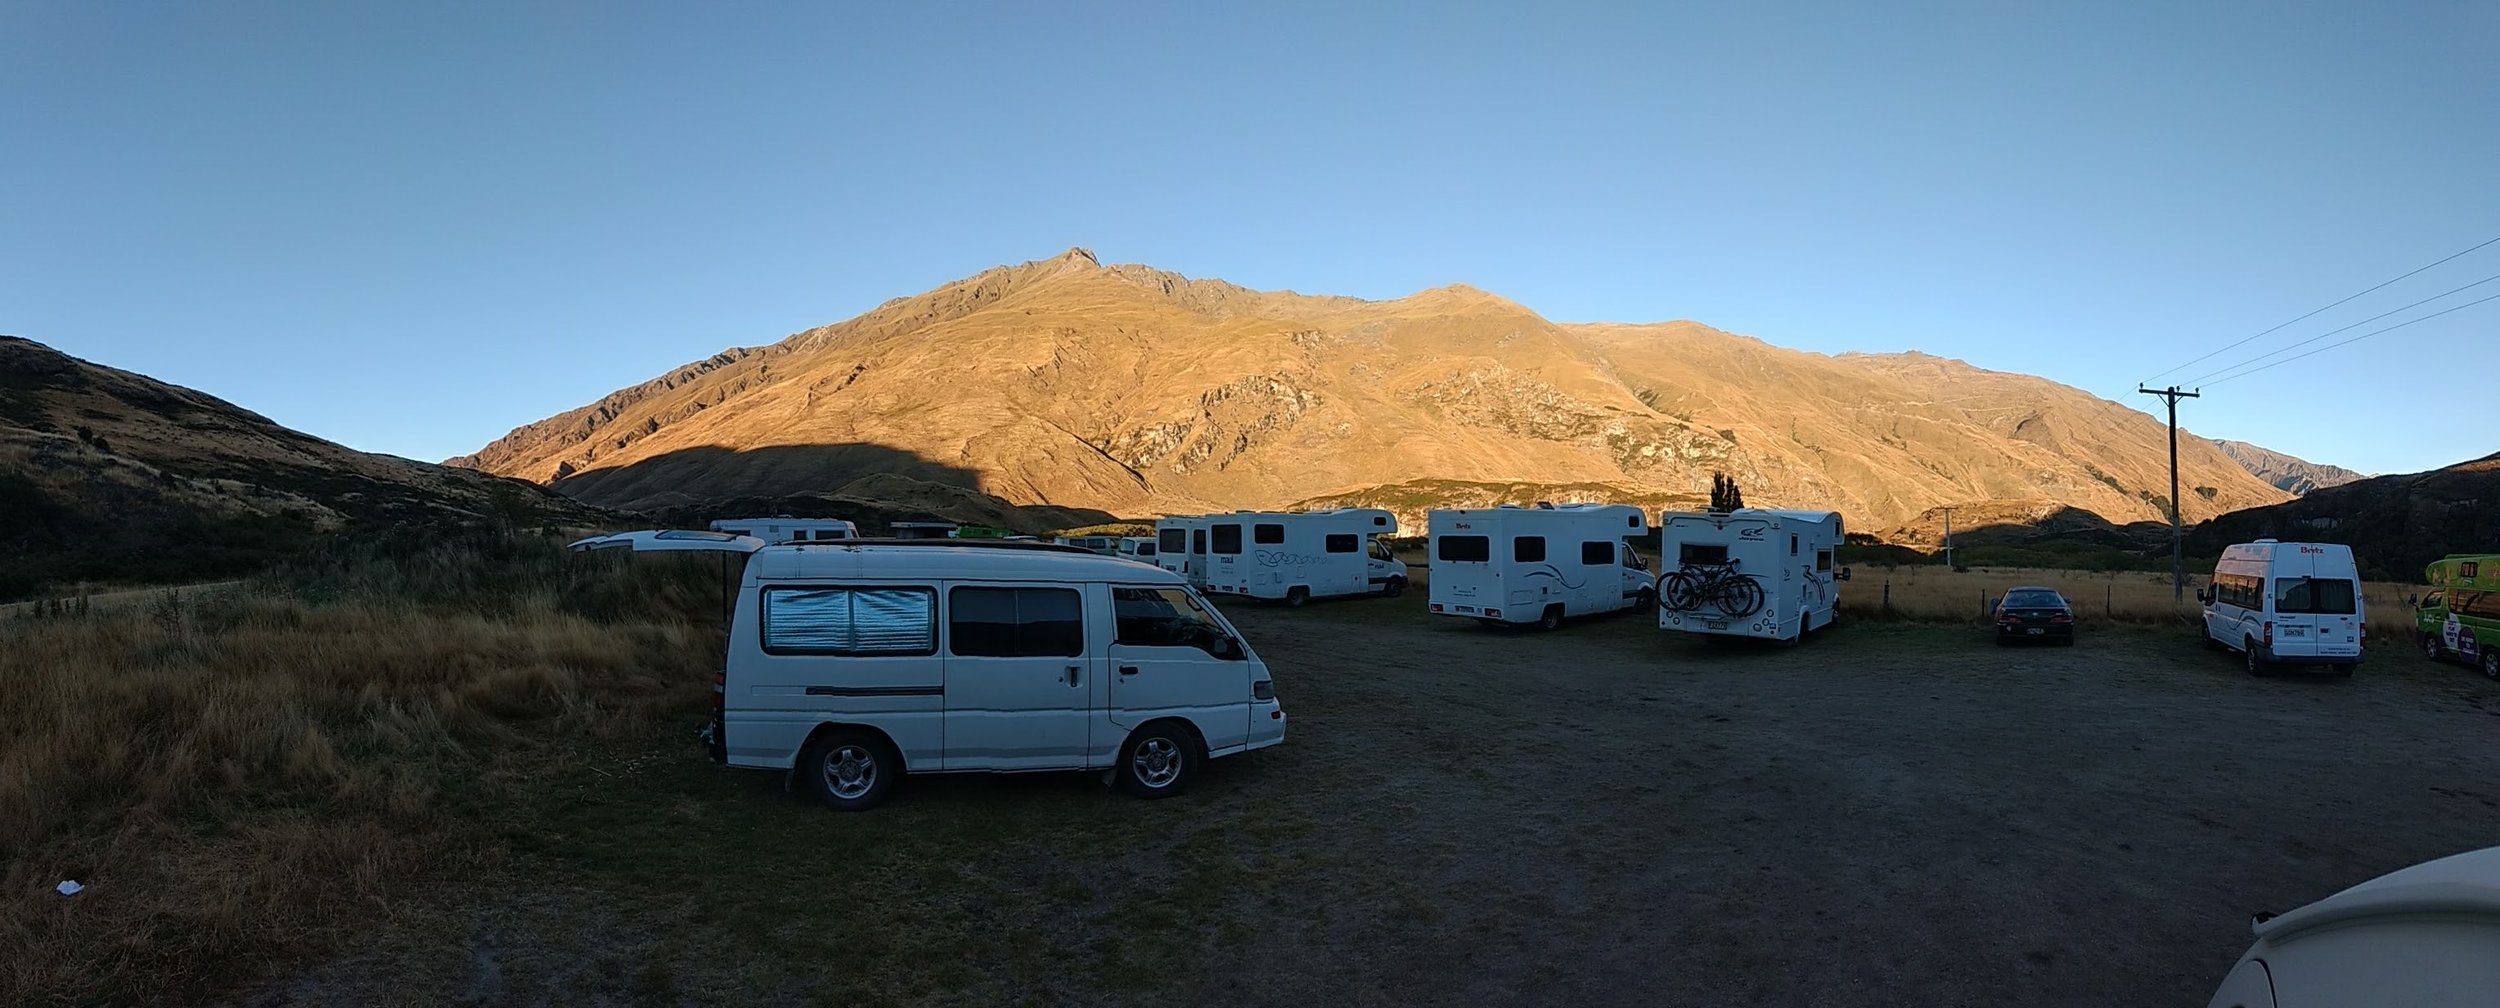 Freedom Campsite near Lake Wanaka - South Island, New Zealand